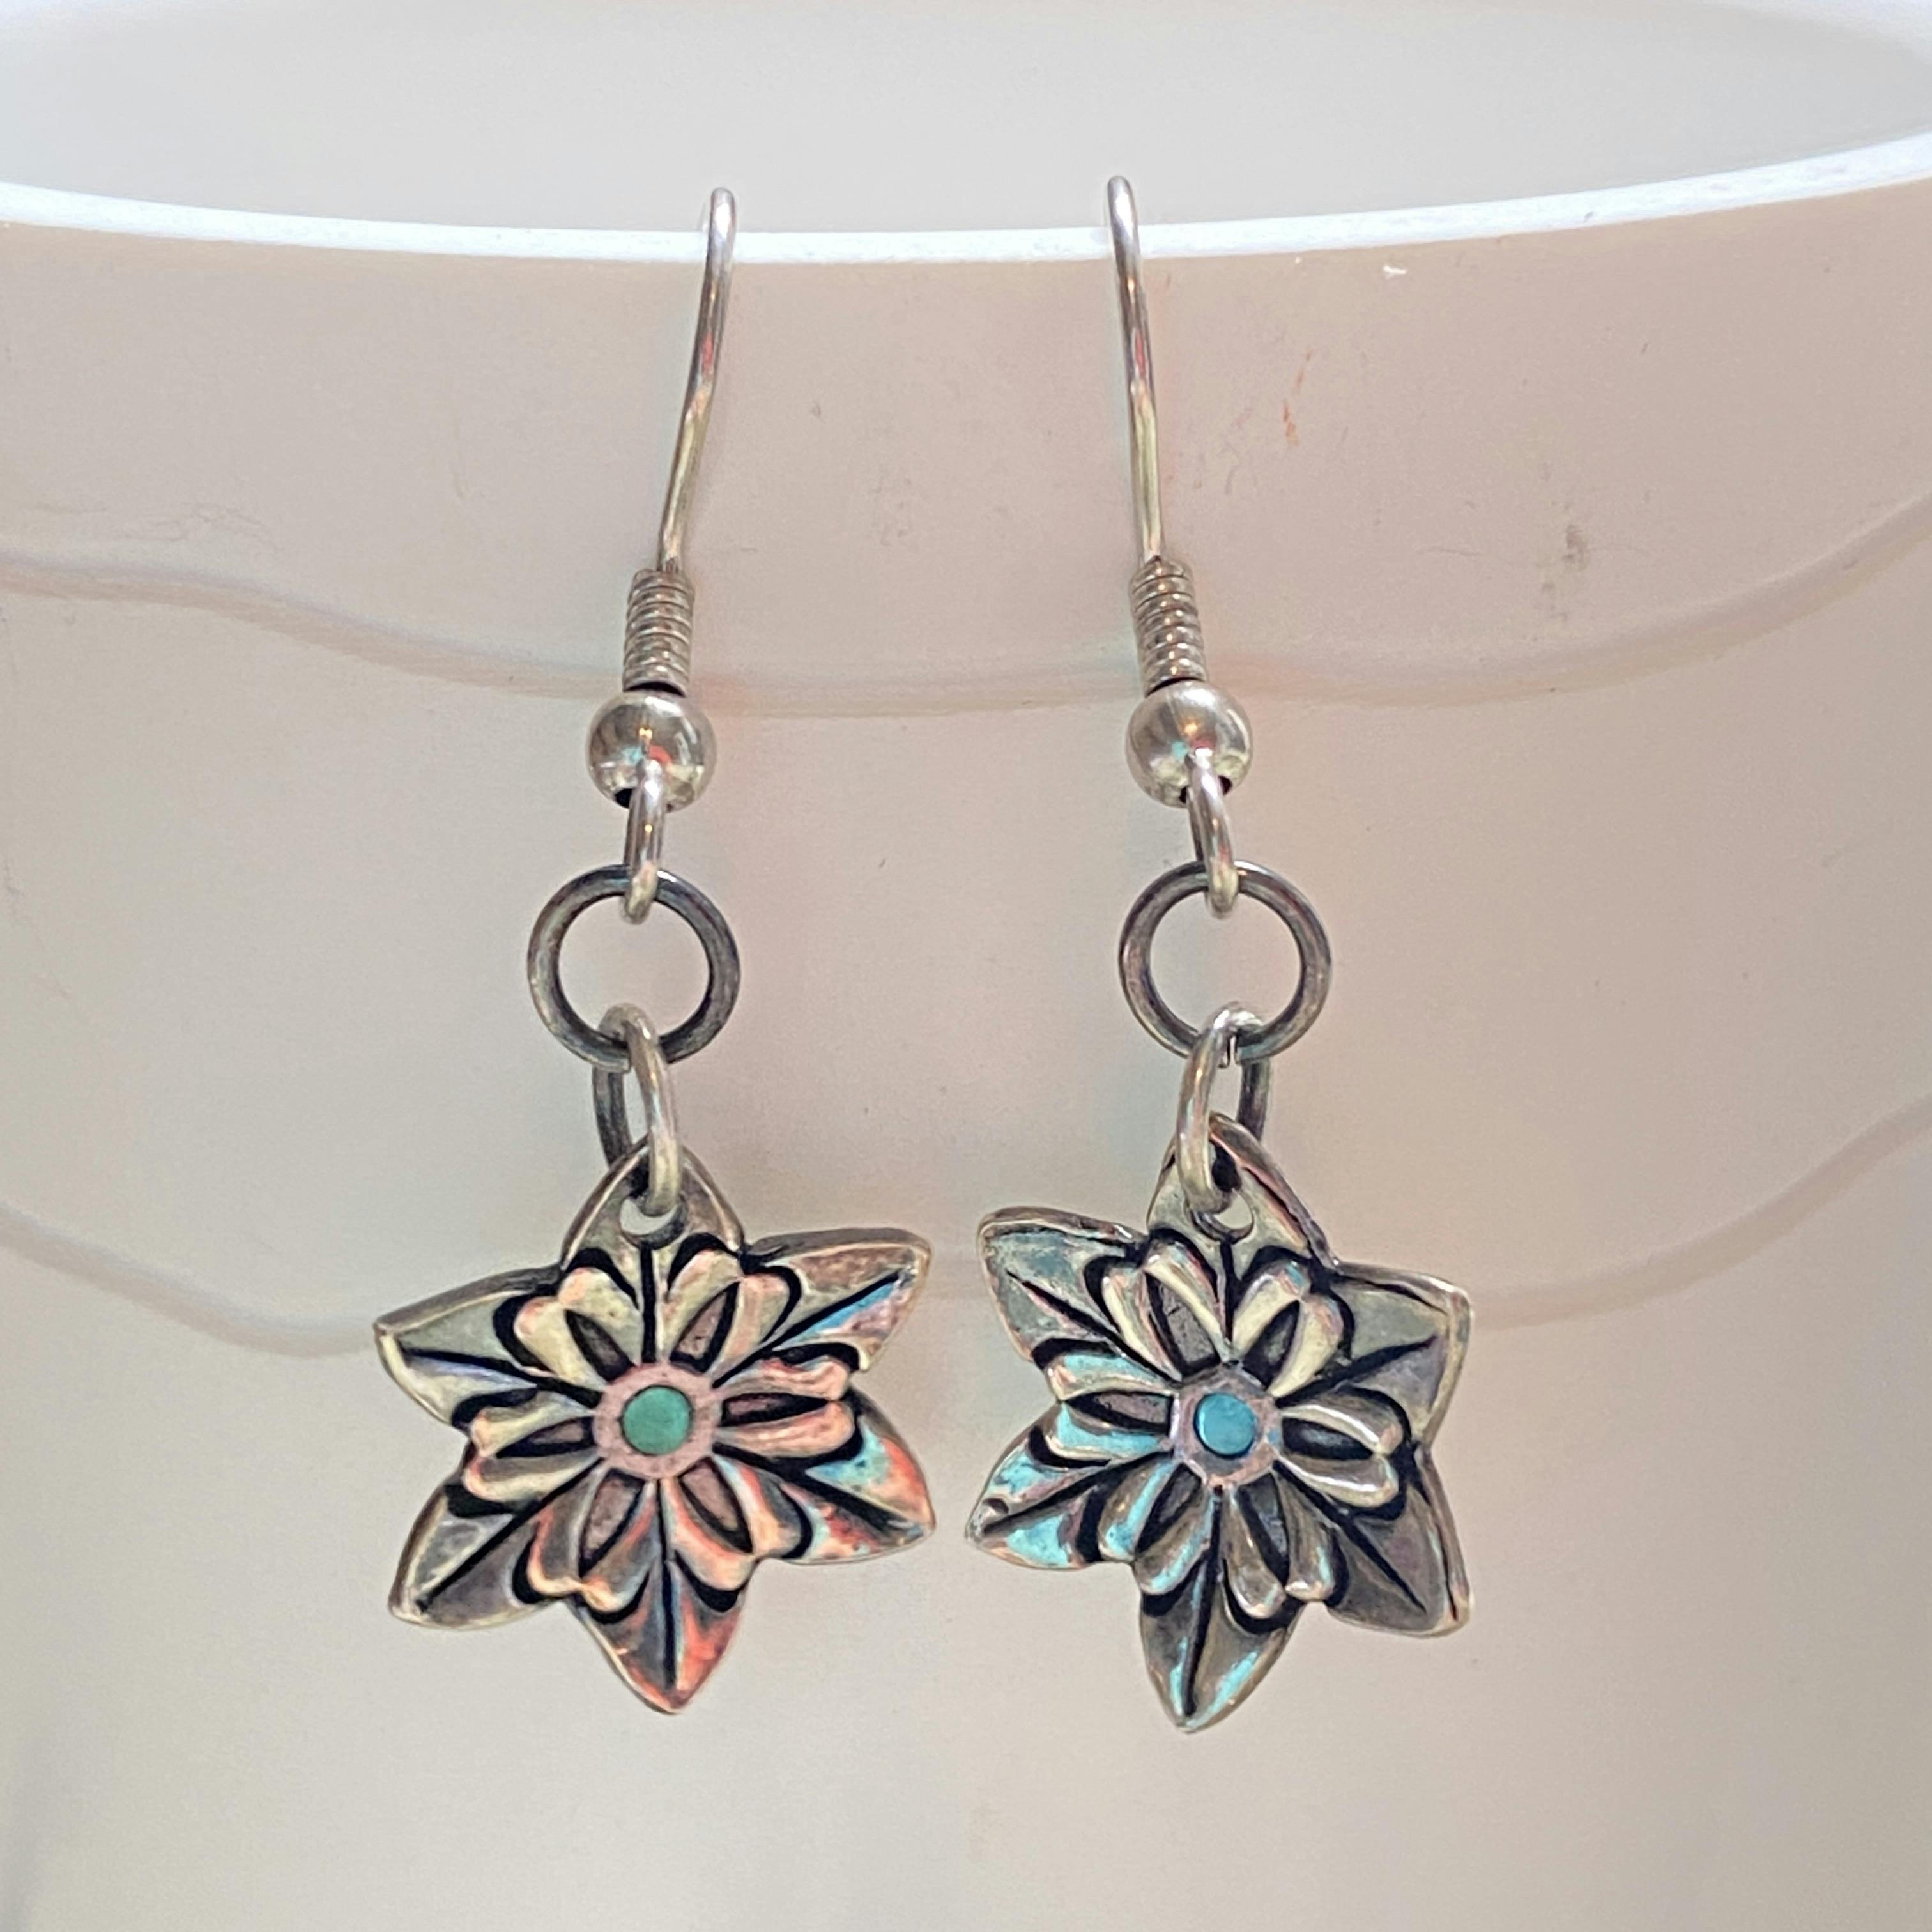  Silver Rustic Flower Dangle Earrings with Crystal